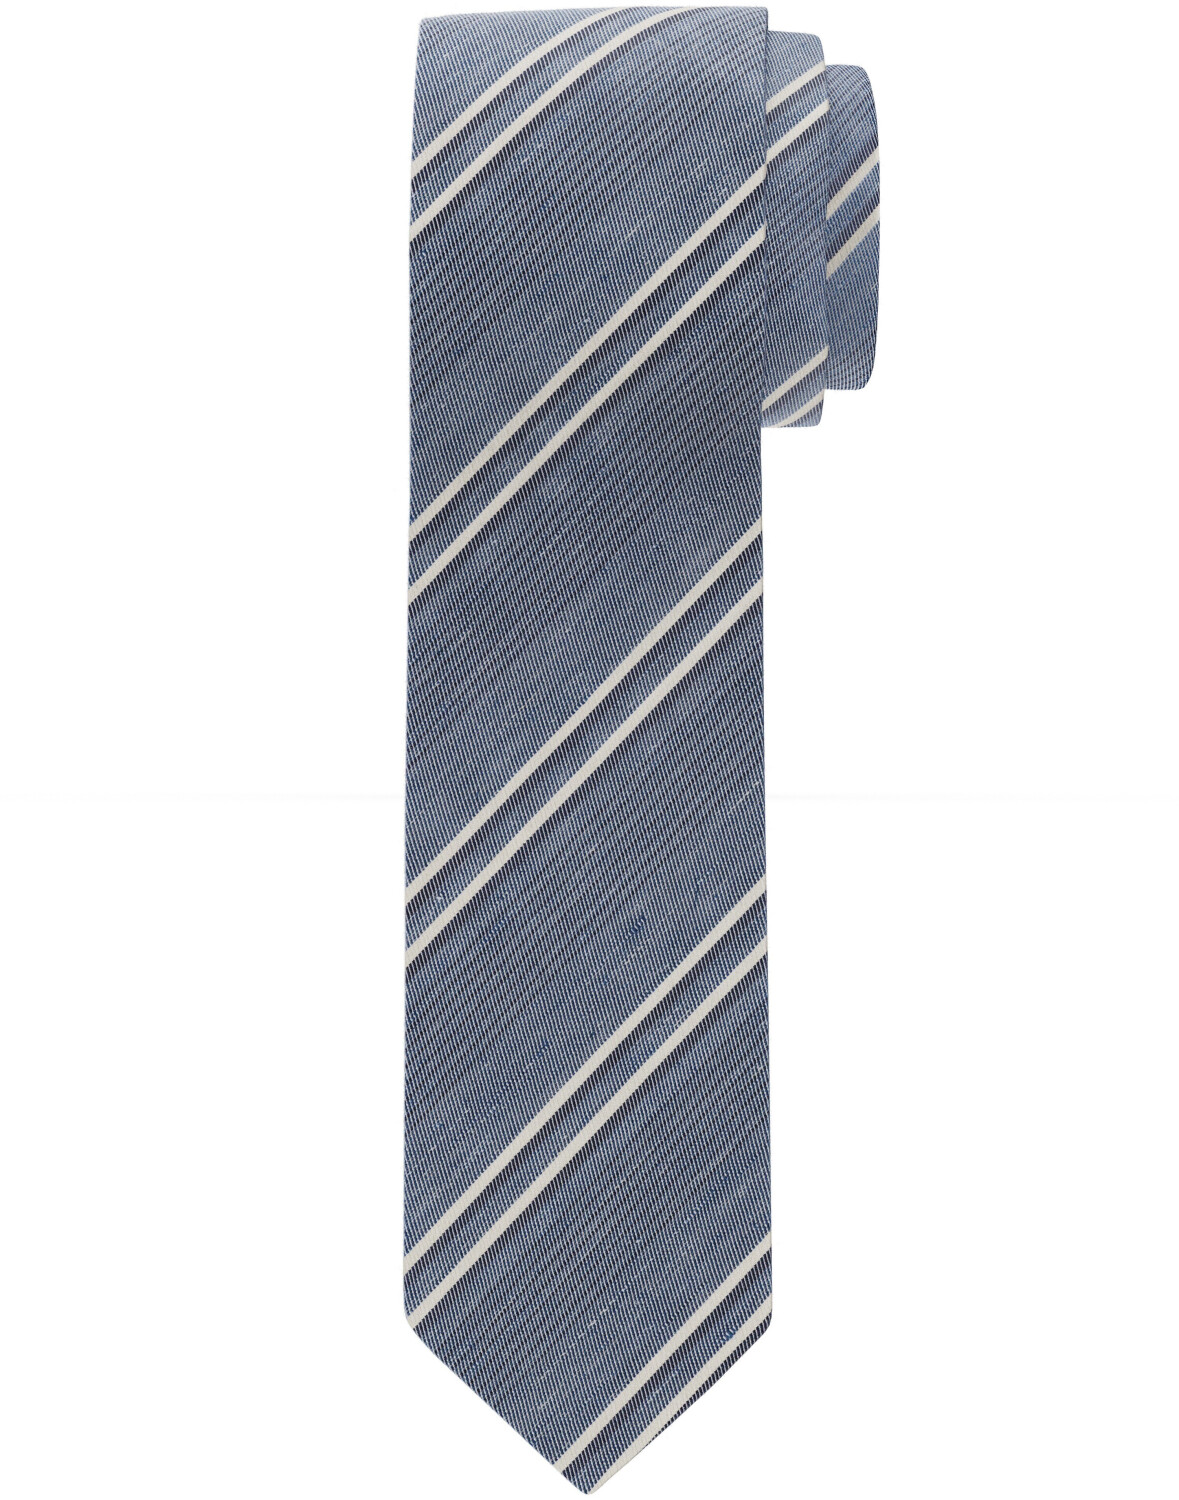 OLYMP Krawatte Blau (1757301501) ab 15,98 € | Preisvergleich bei